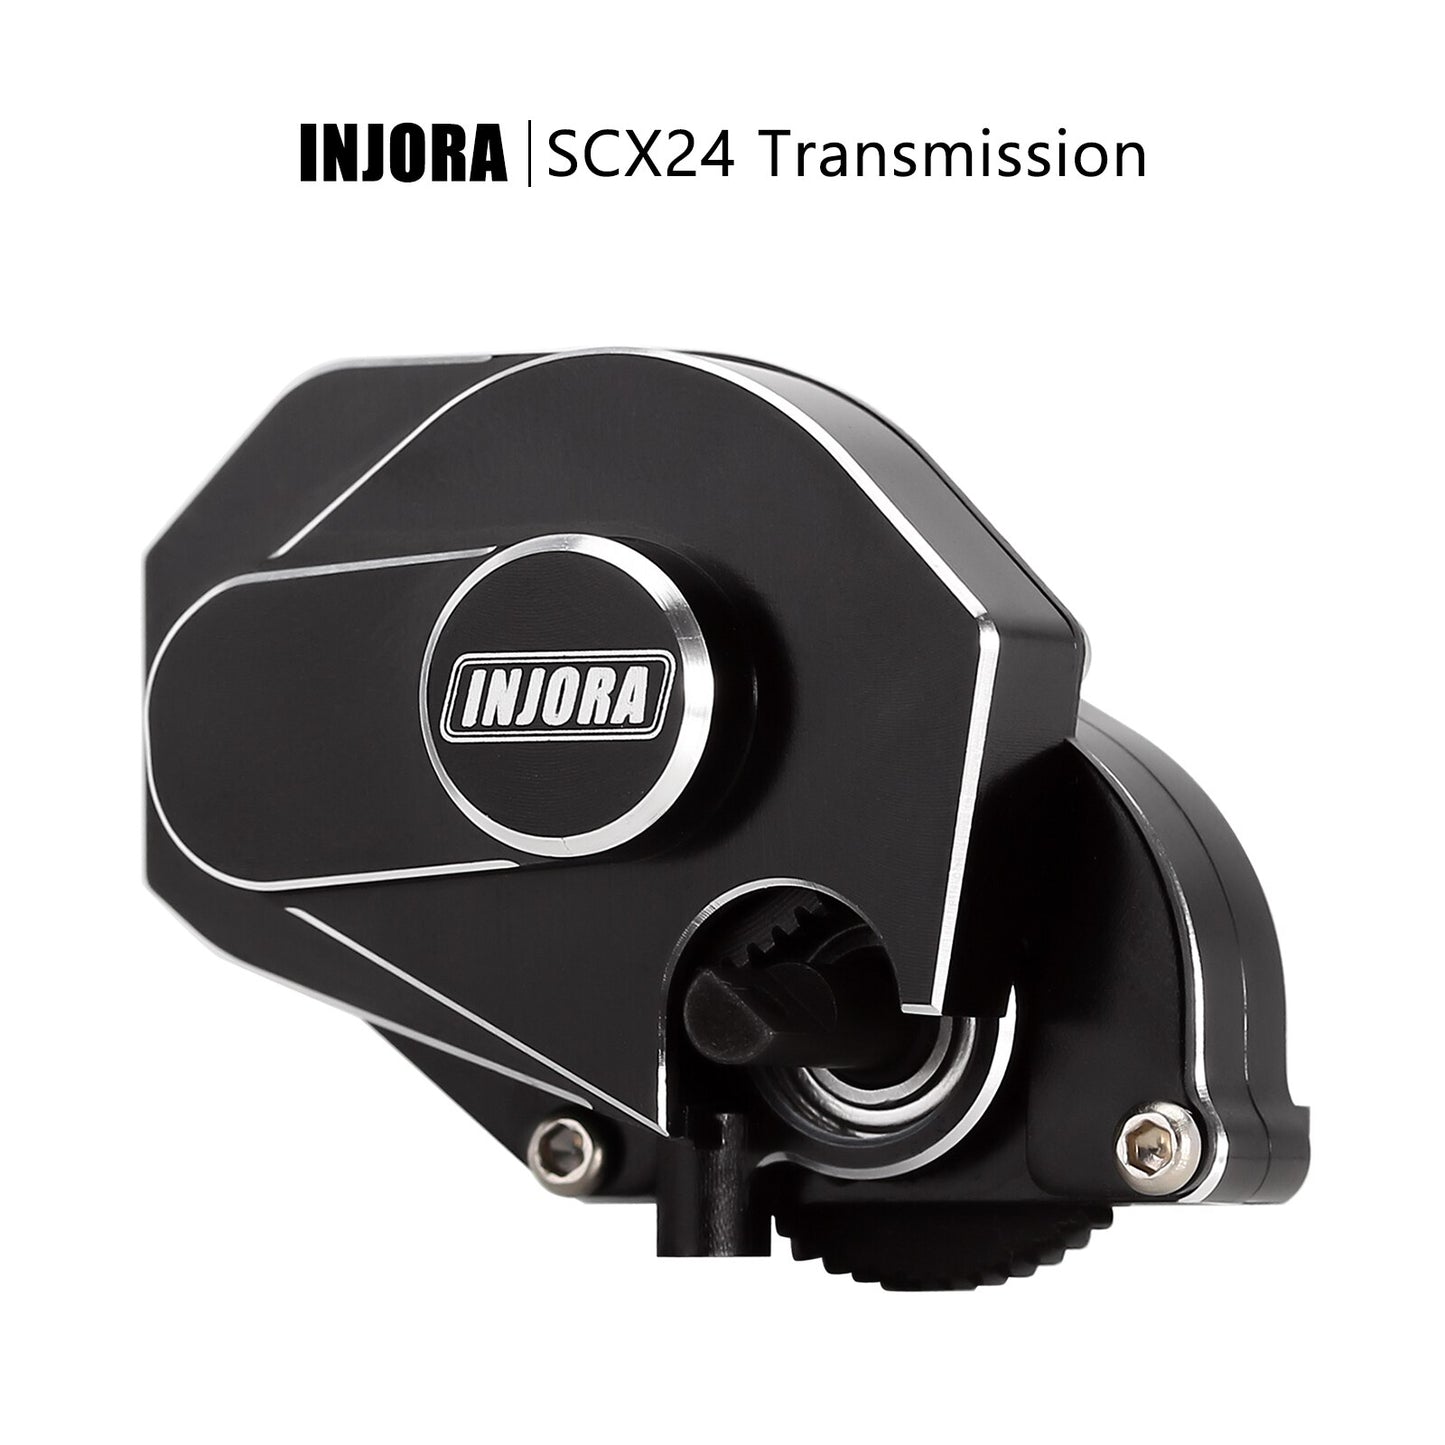 INJORA LCG Carbon Fiber Chassis Kit Frame Girder for 1/24 RC Crawler Axial SCX24 Deadbolt JLU C10 Bronco Upgrade Part